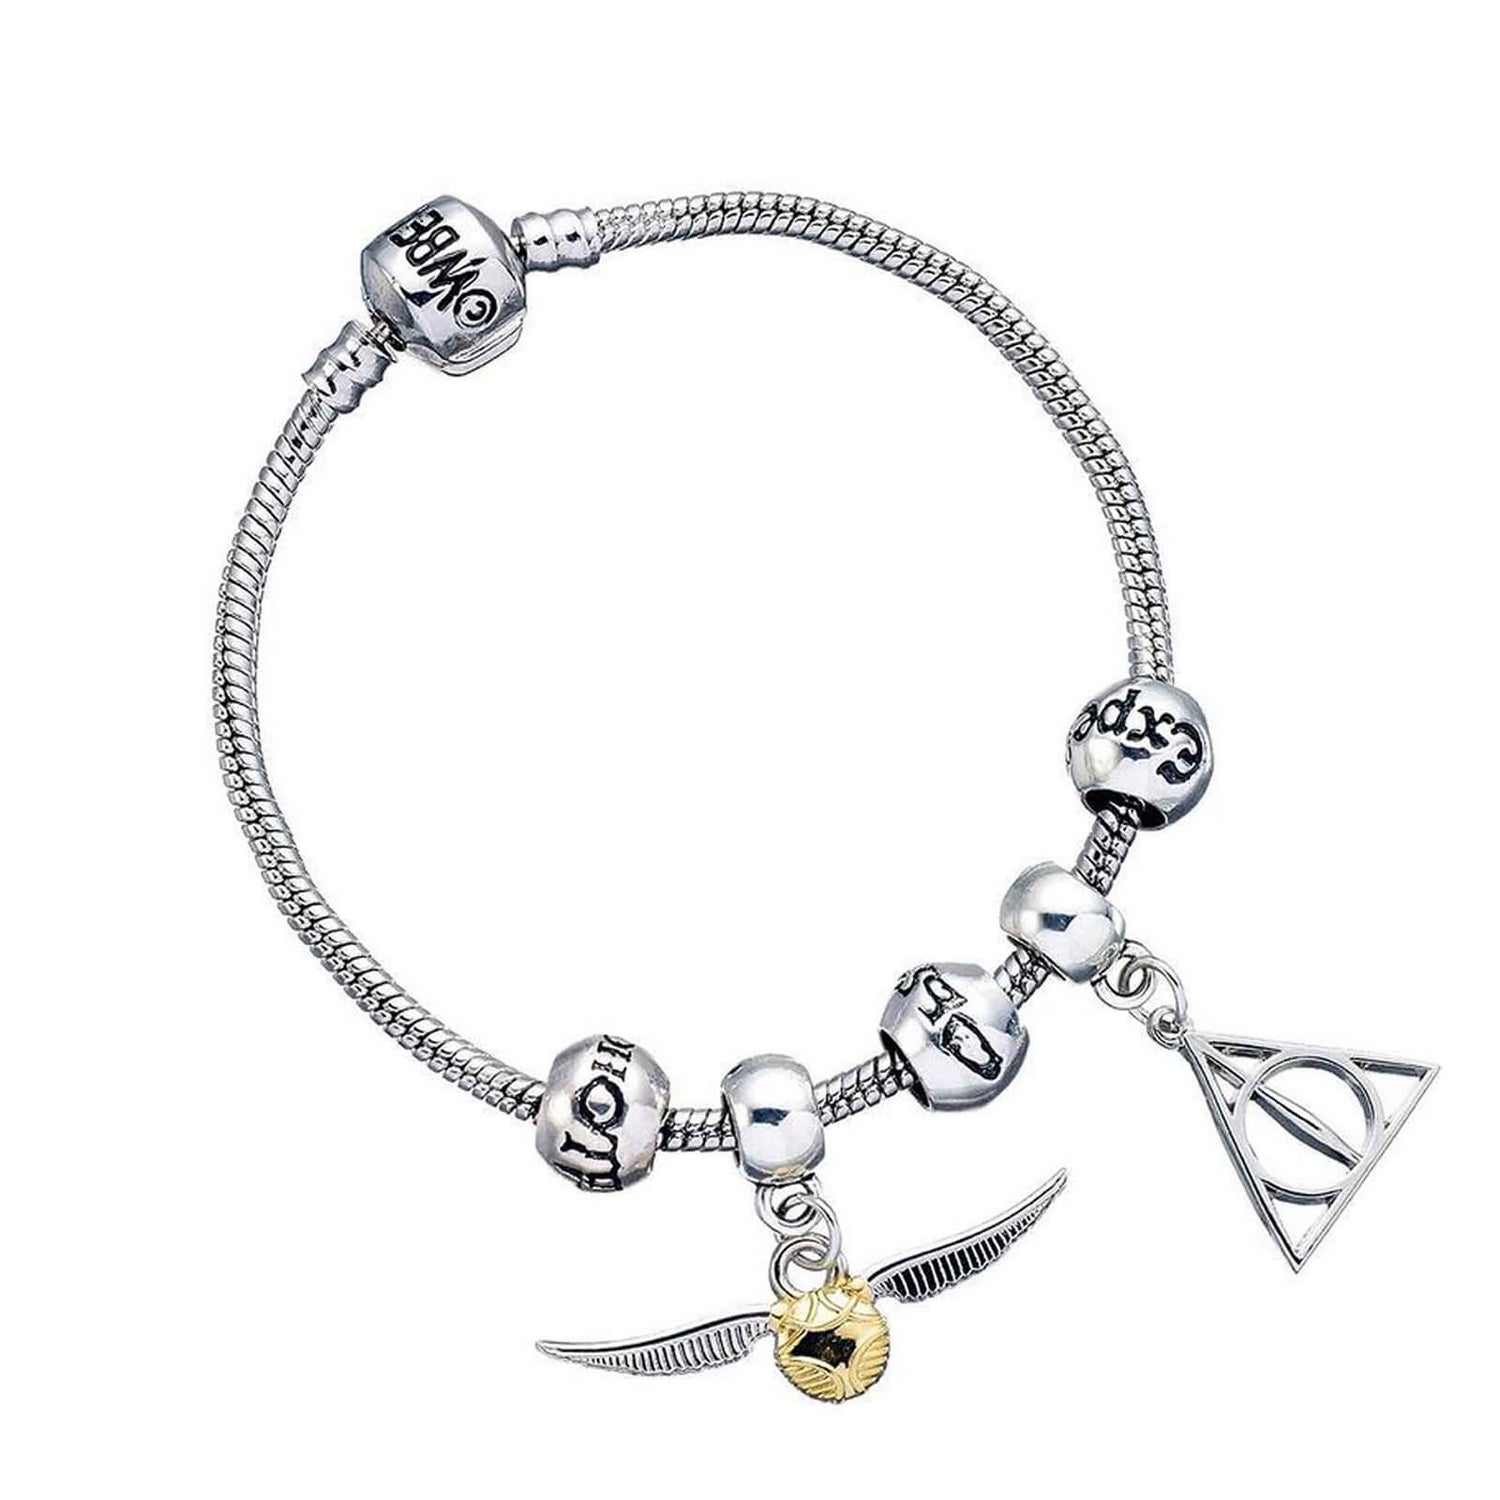 Harry Potter Charm Bracelet Set - Deathly Hallows, Golden Snitch, 3 Spell Beads - Silver - Medium - 19cm